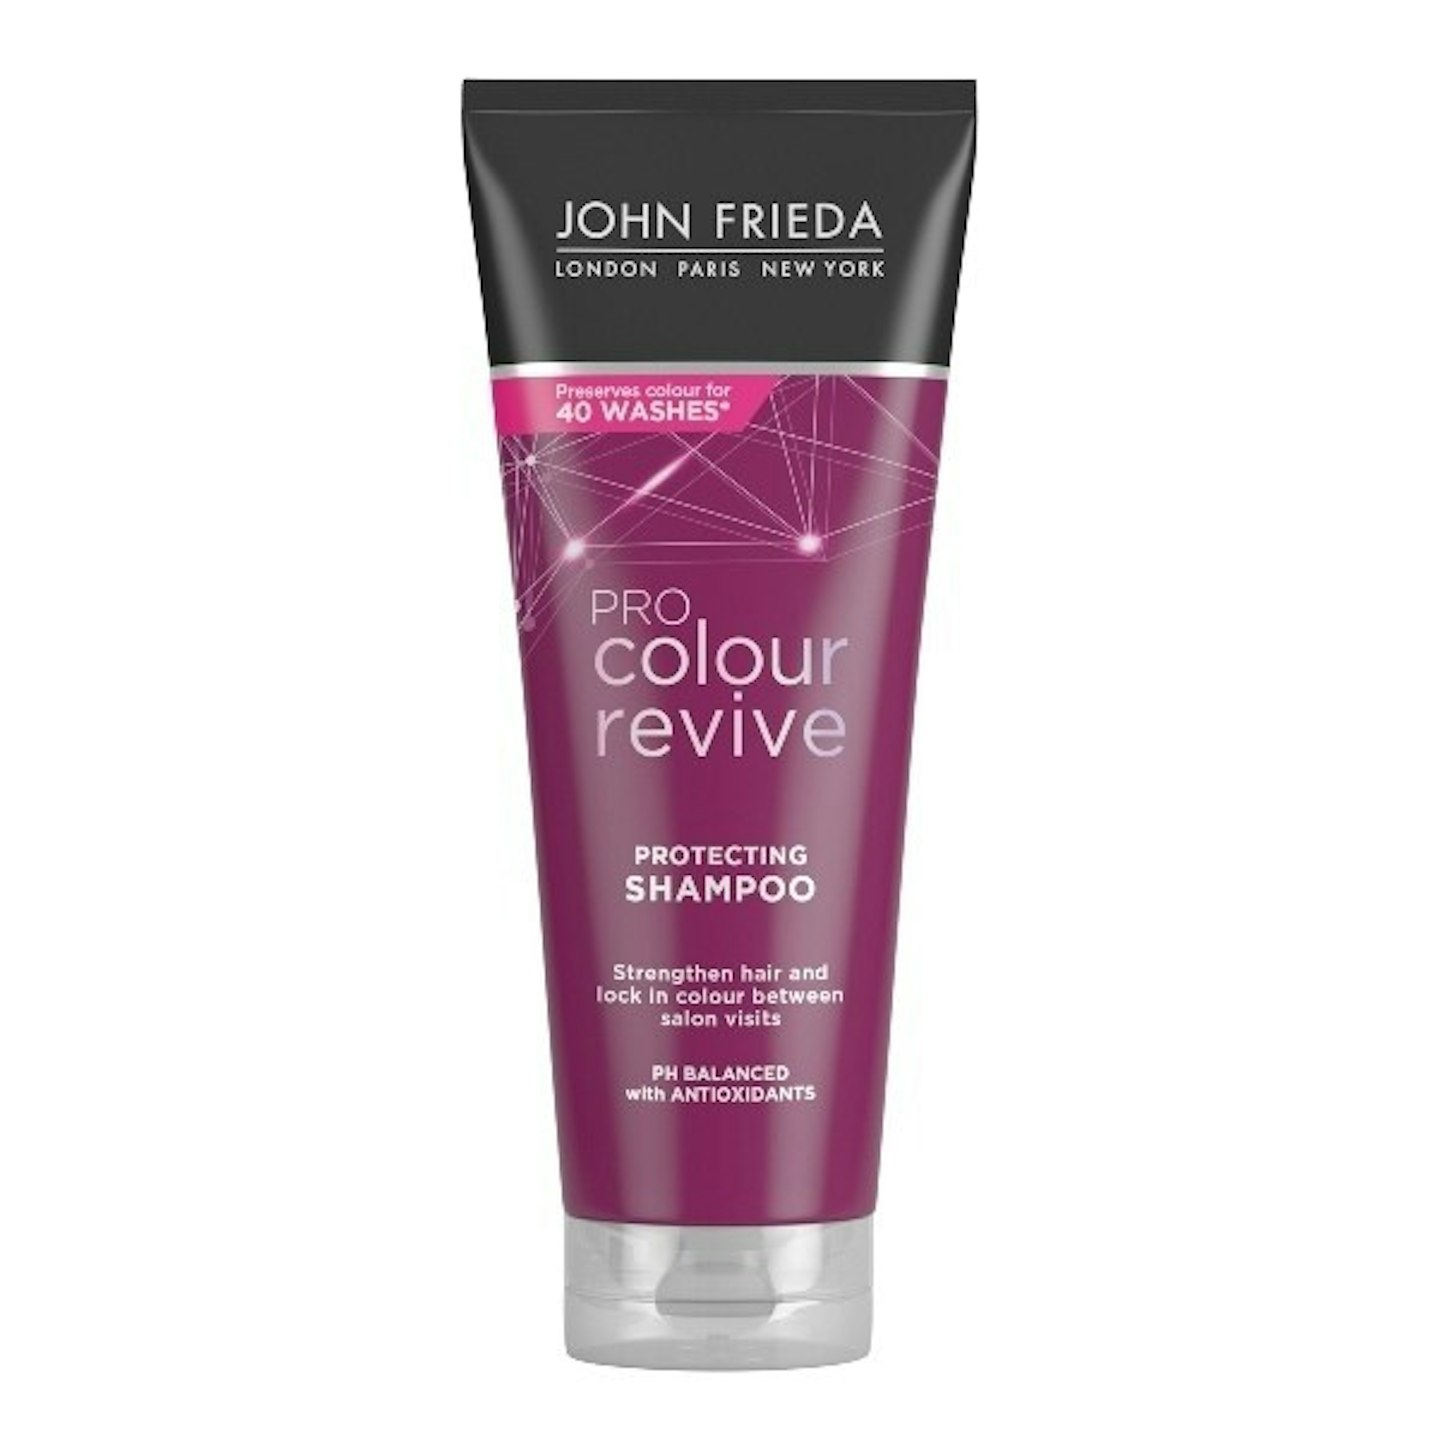 John Frieda Pro Colour Revive Shampoo, £8.99